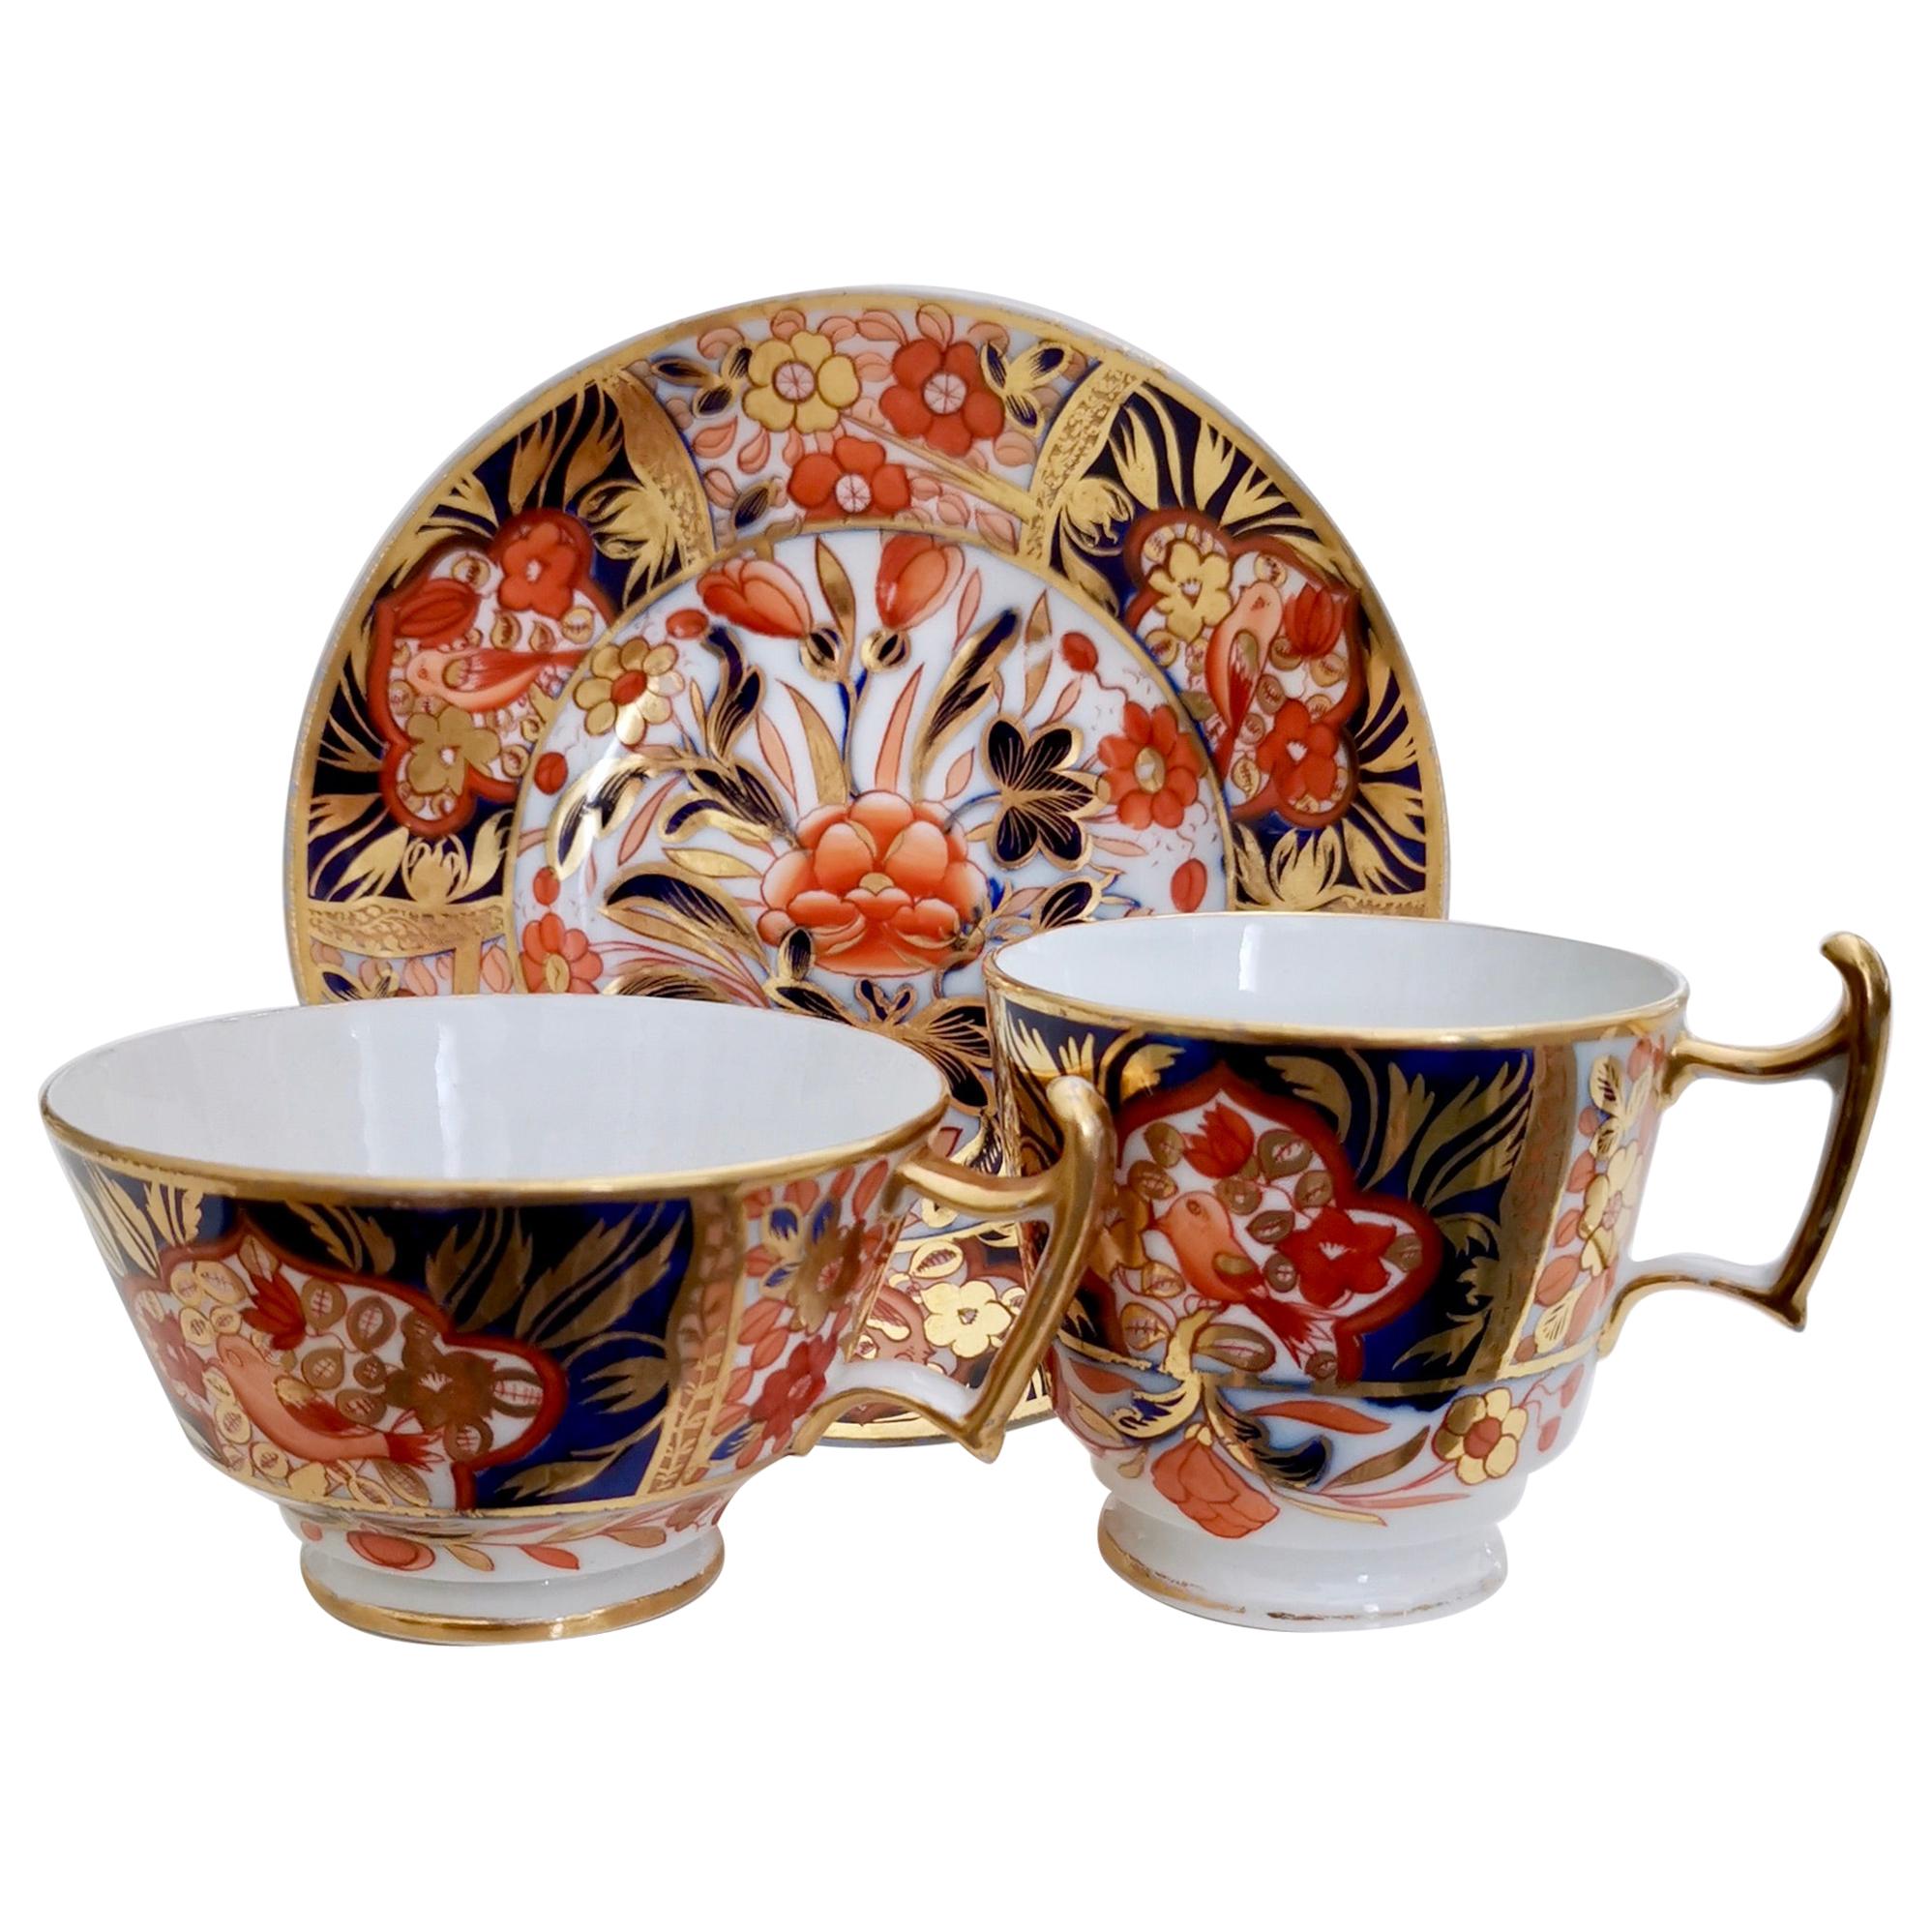 John Rose Coalport Porcelain Teacup, Red Japan Imari with Birds, Regency, 1815